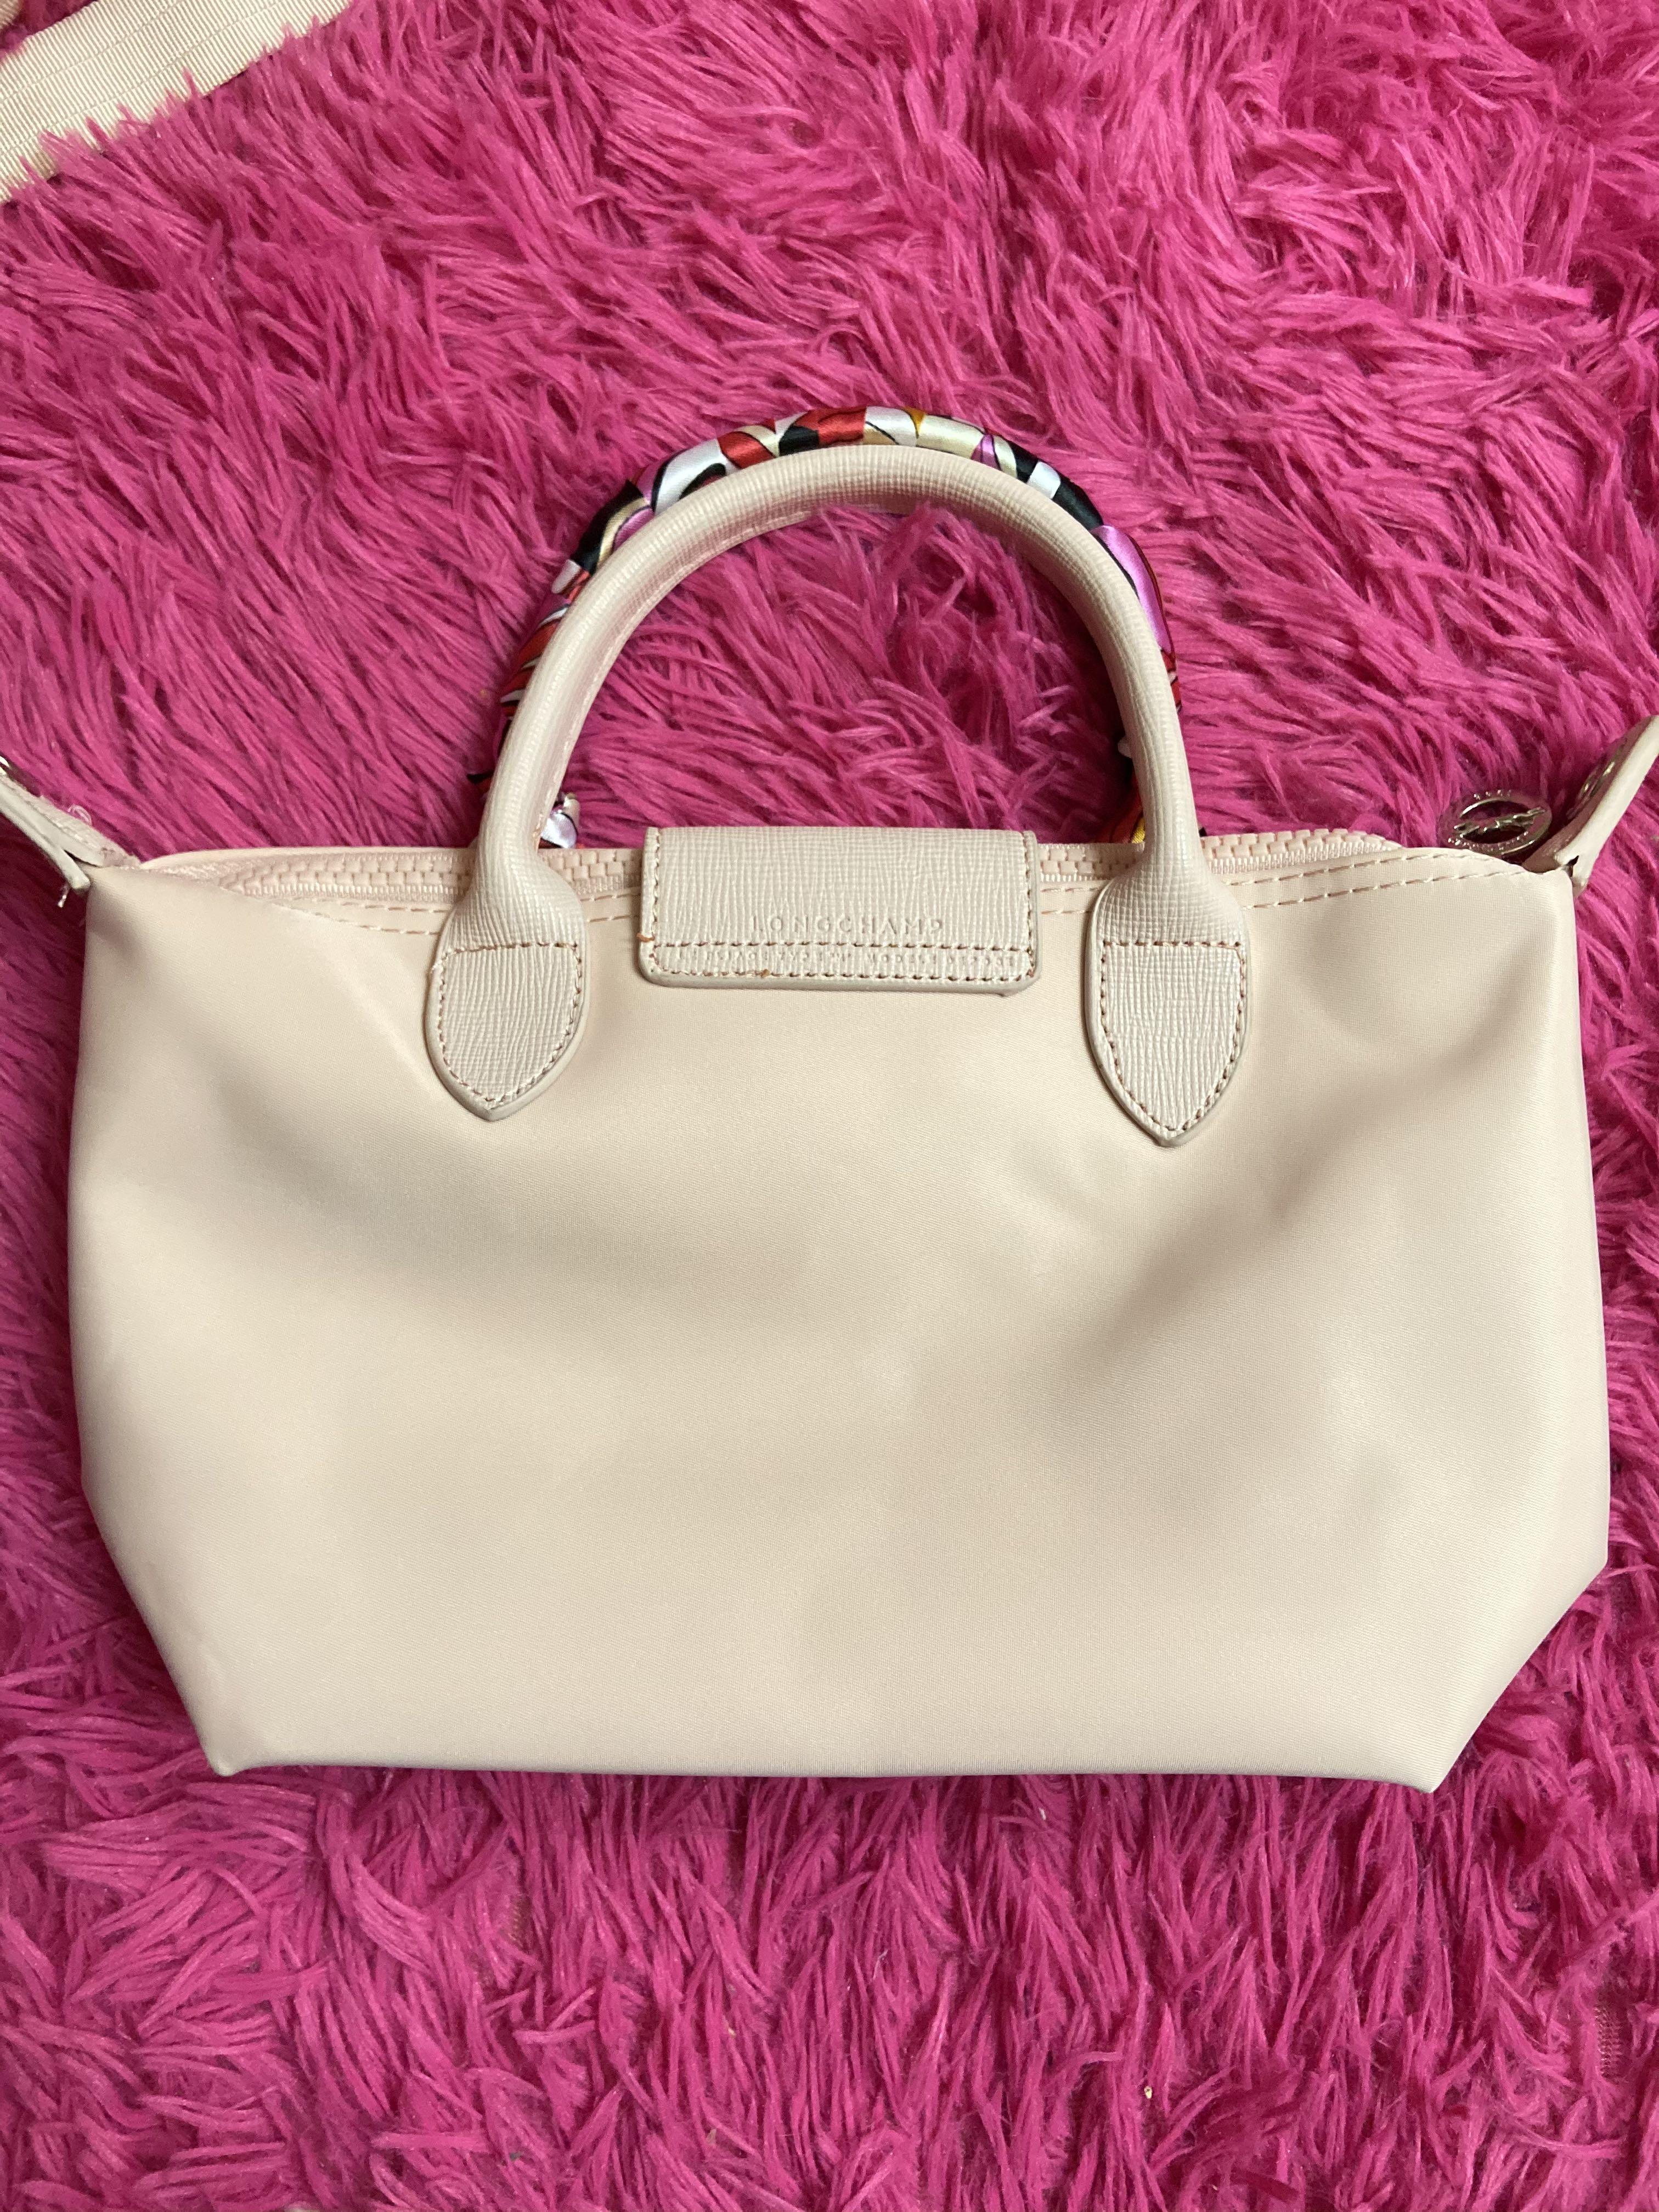 longchamp handbag small pink f 1601529252 e0f76a12 progressive